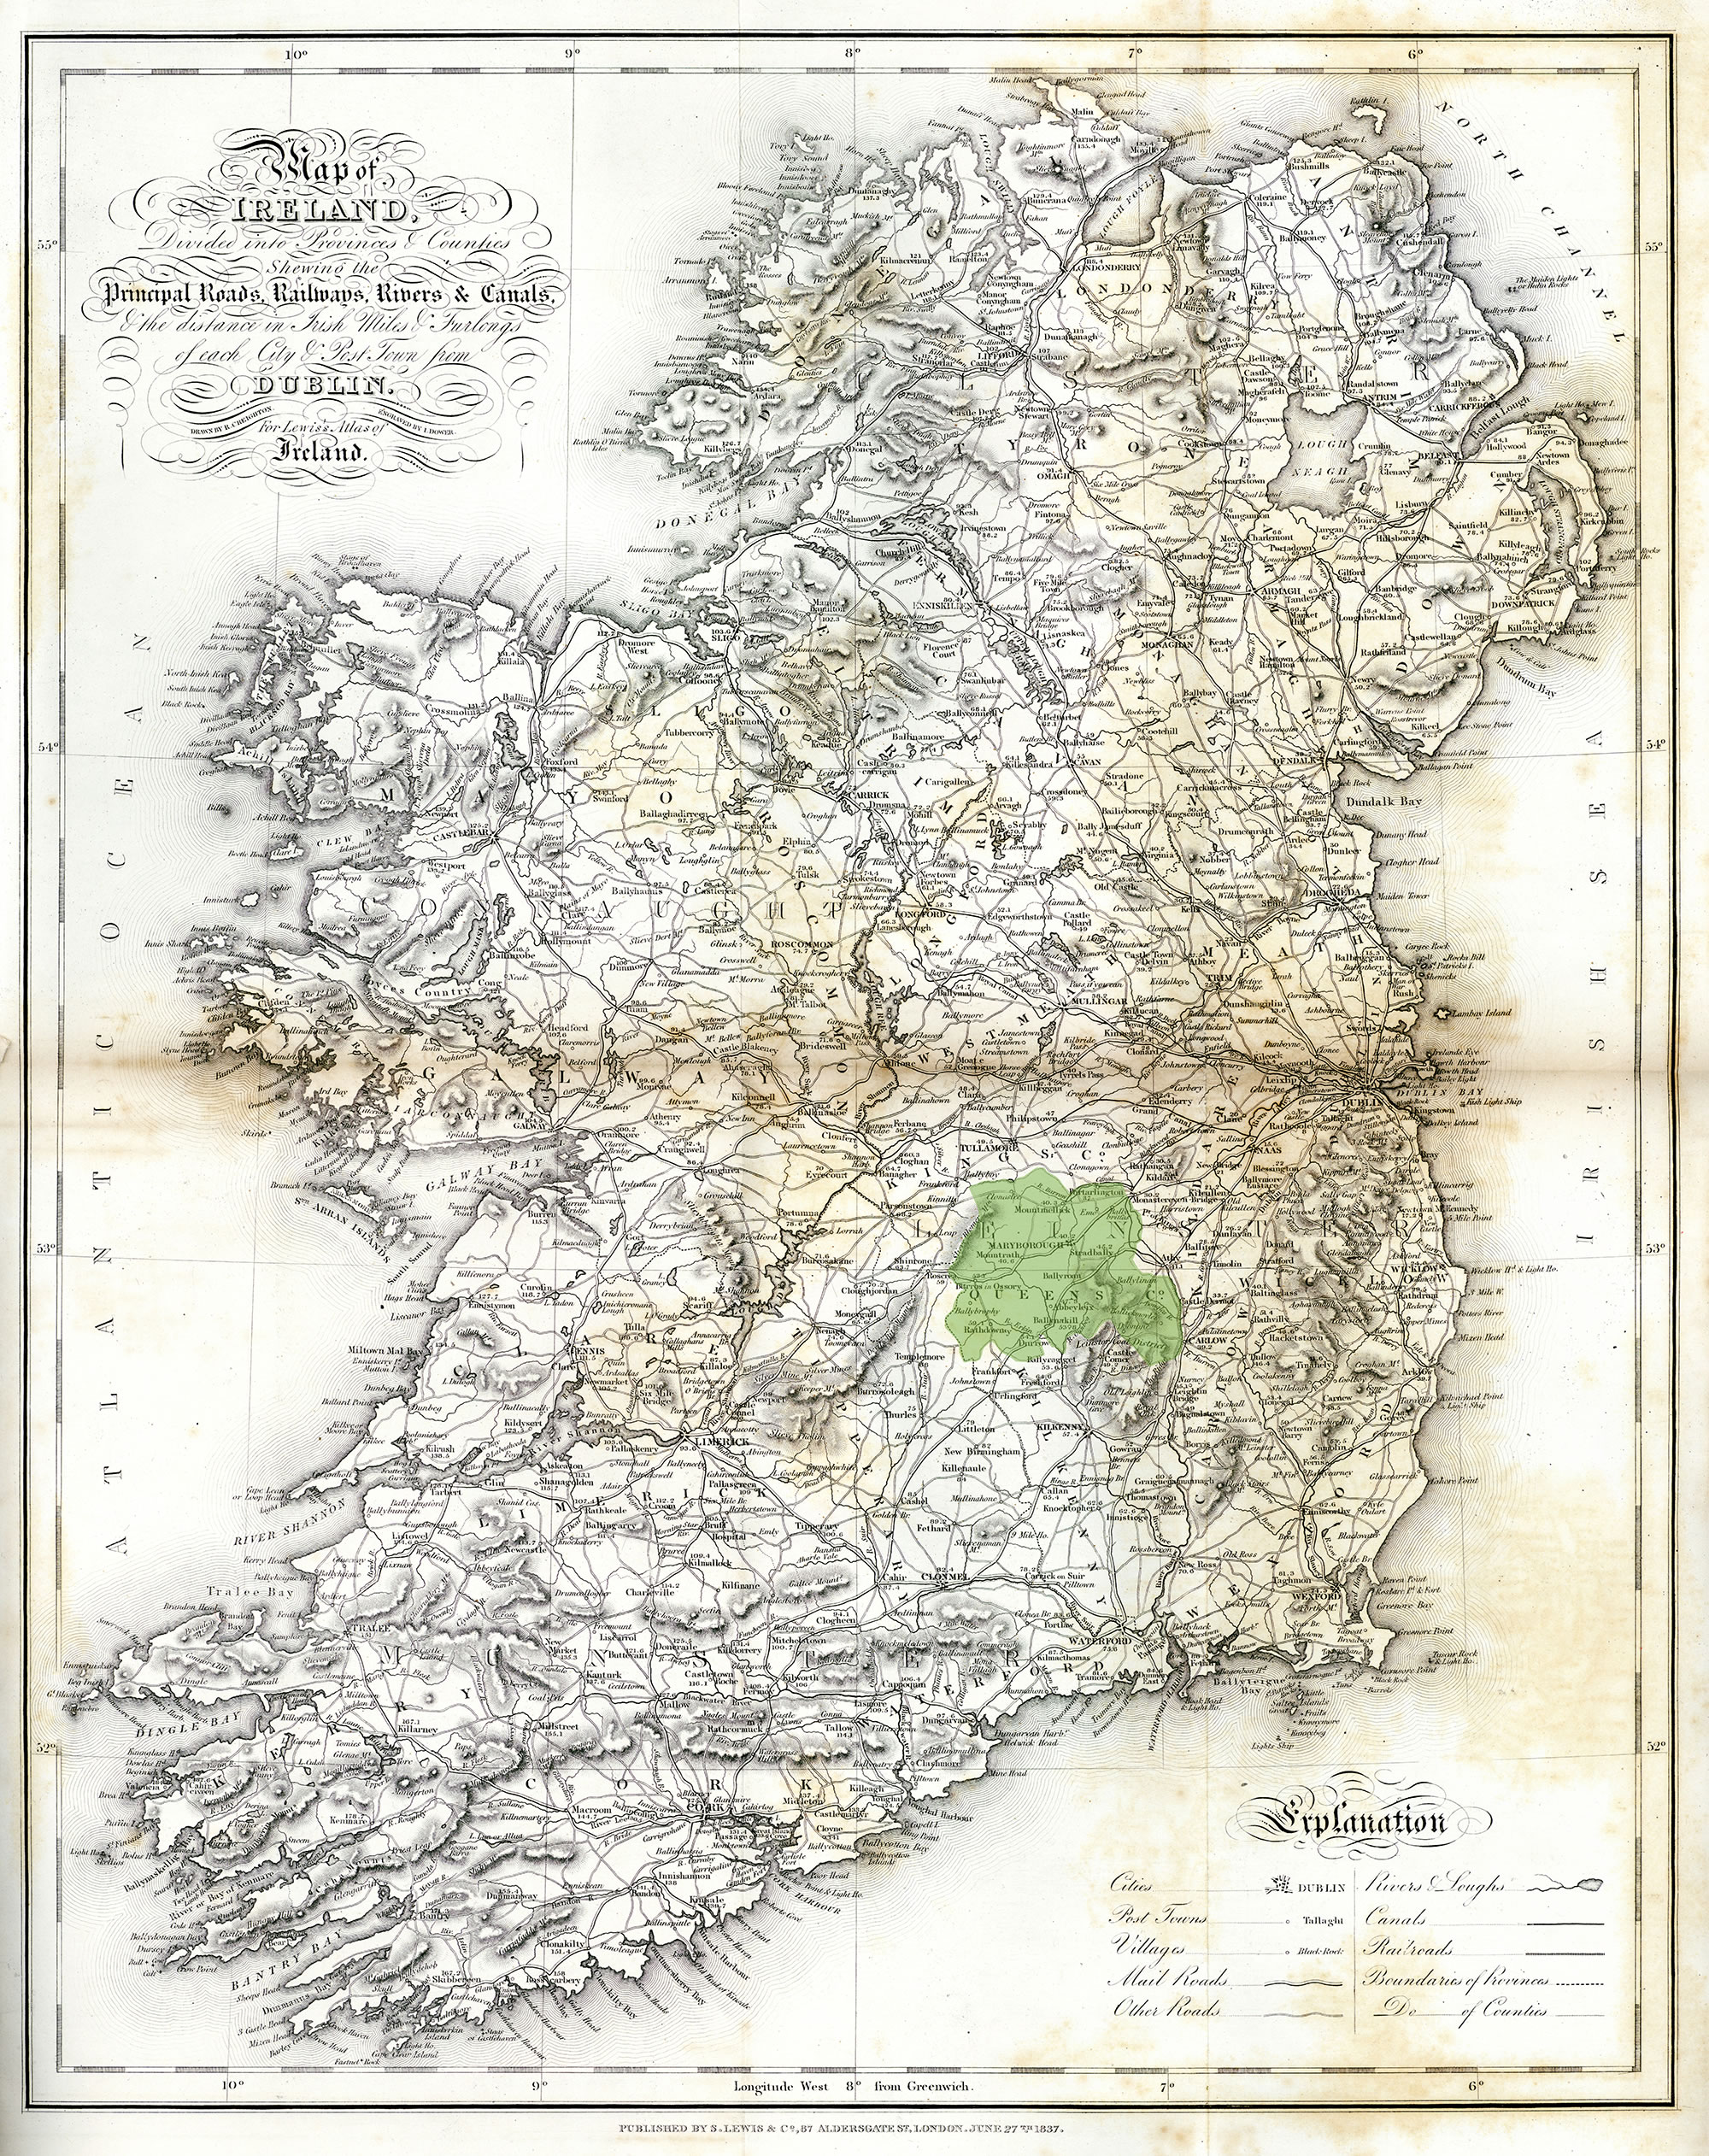 County Laois is double landlocked in Ireland